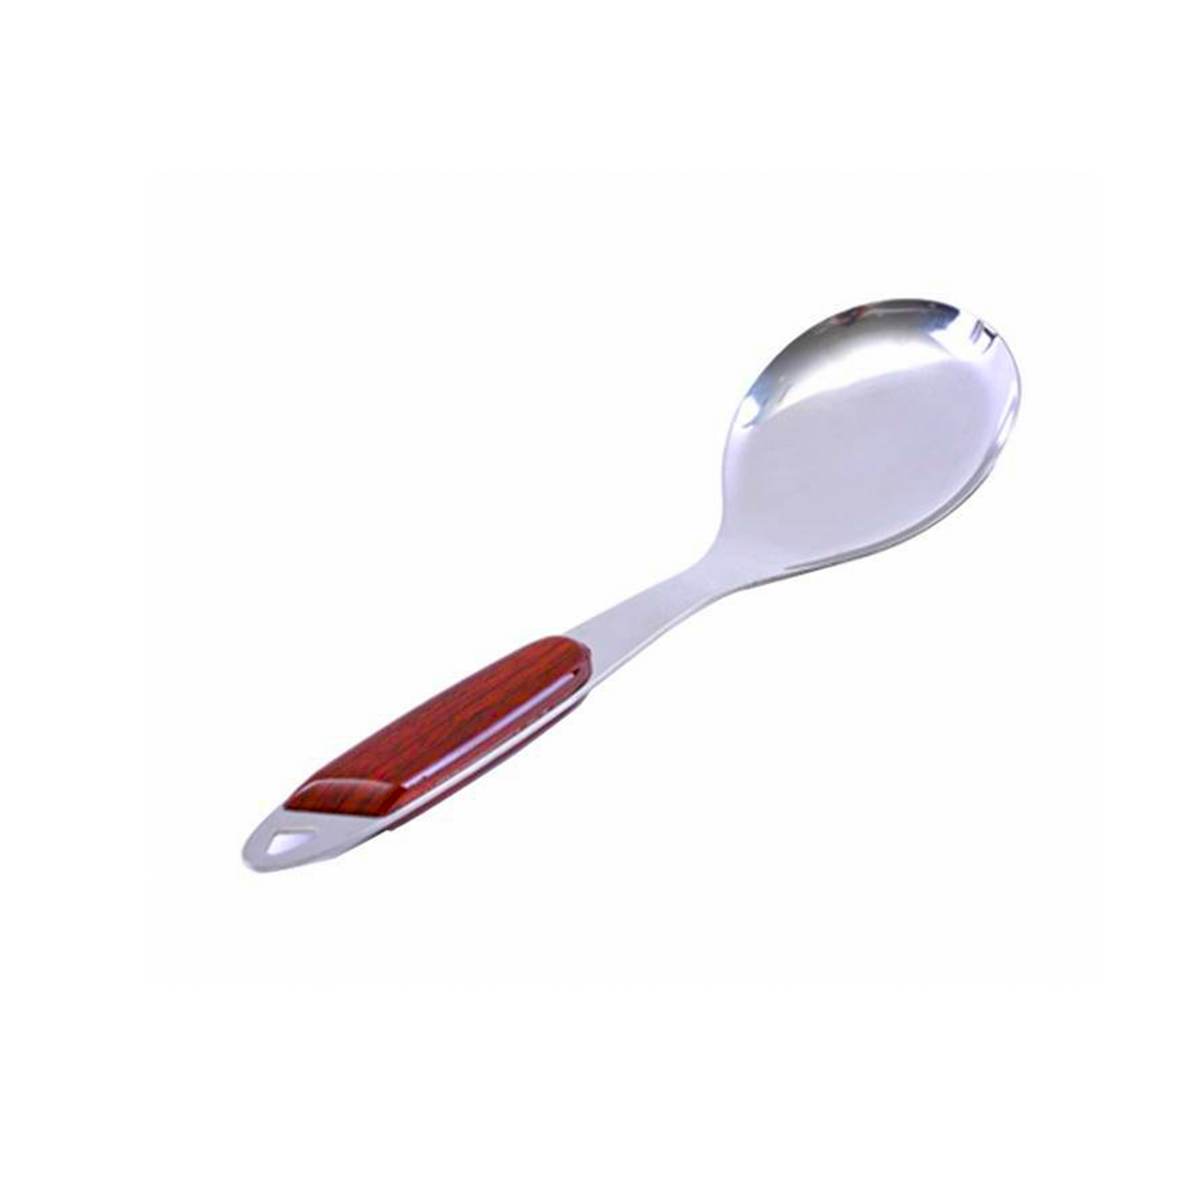 Rf2060Sp S/Steel Rice Spoon